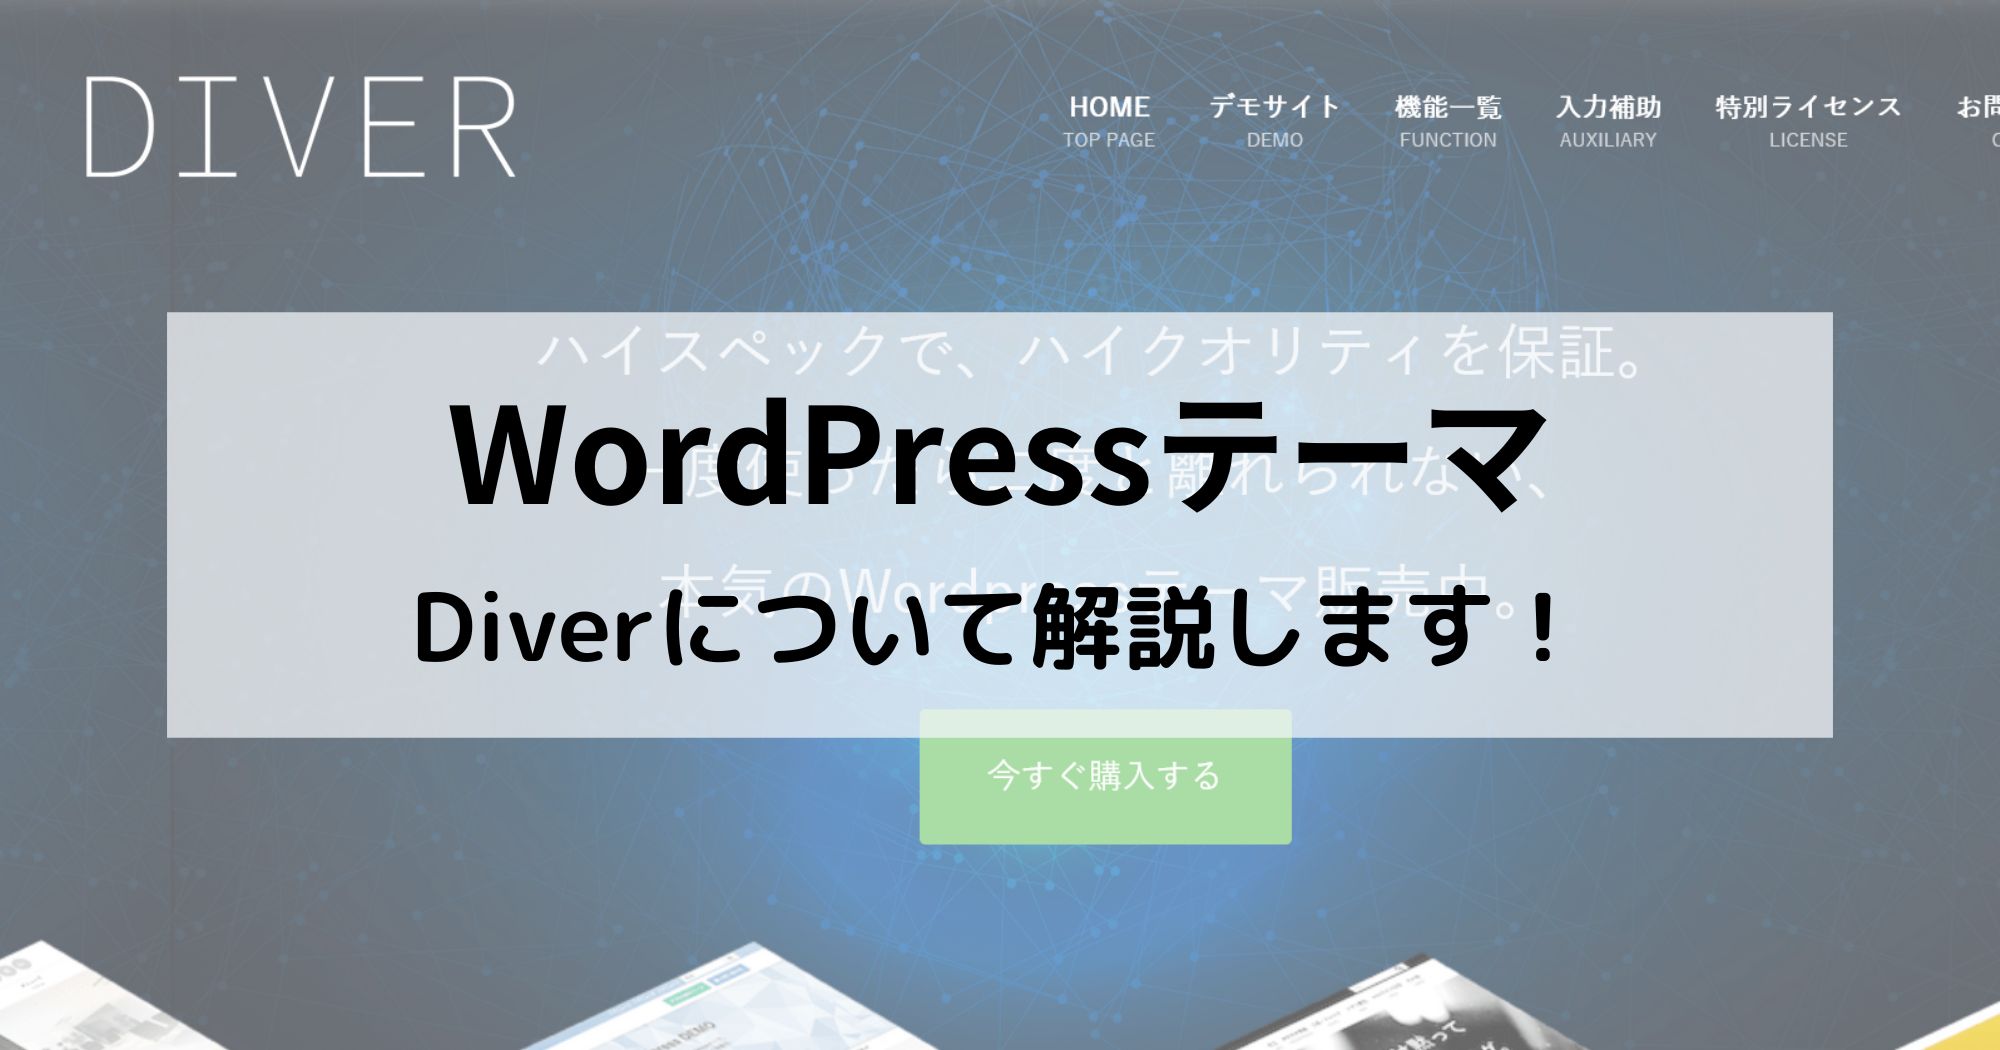 【WordPressテーマ】Diver(ダイバー)はブログ・アフィリエイトに最適【初心者必見】